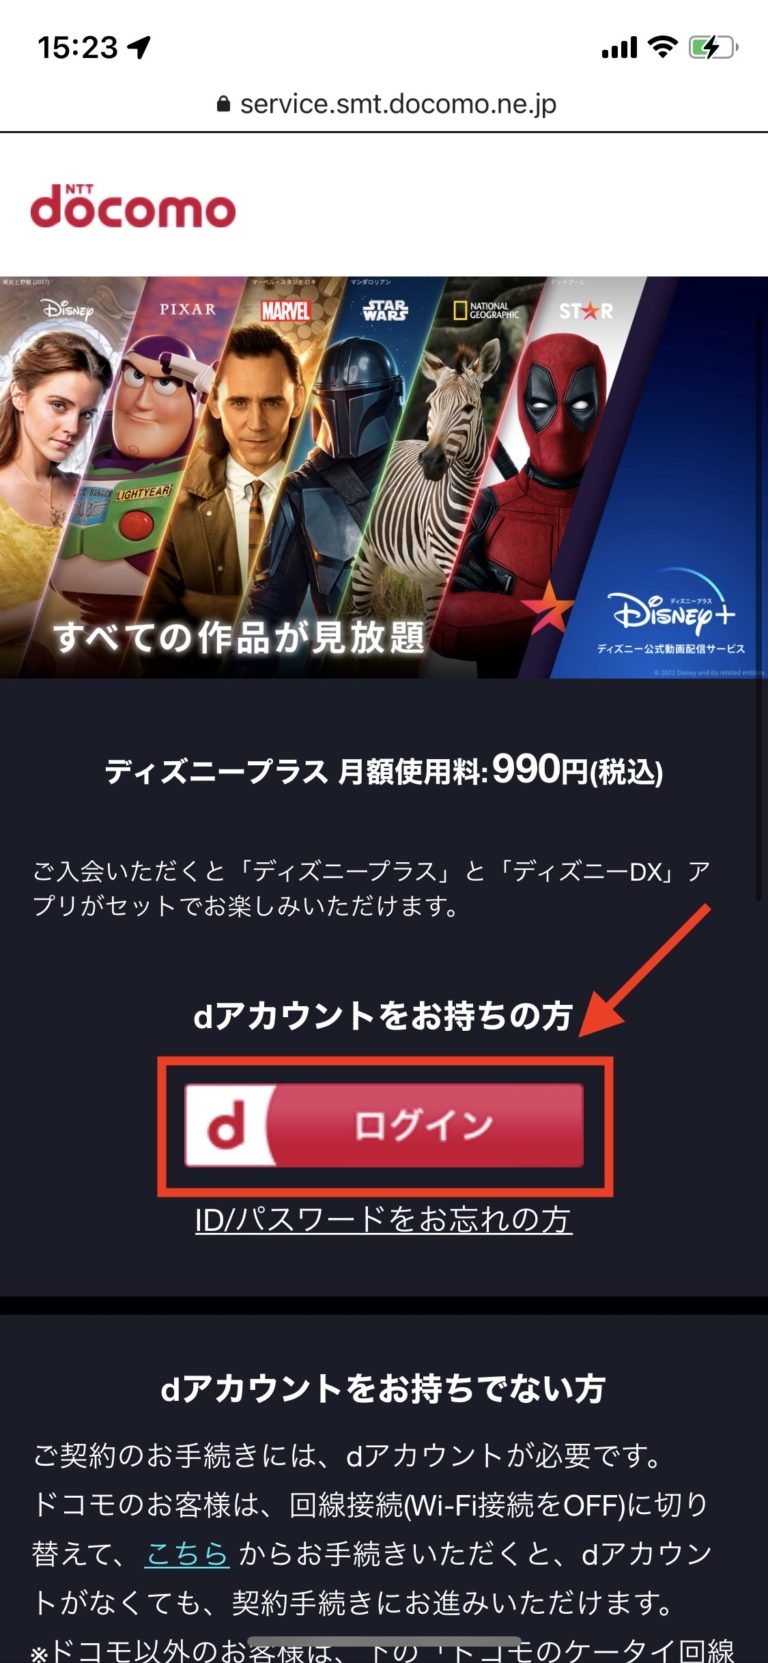 「Disney+ (ディズニープラス)」を視聴するための登録手順まとめ | ネトセツ